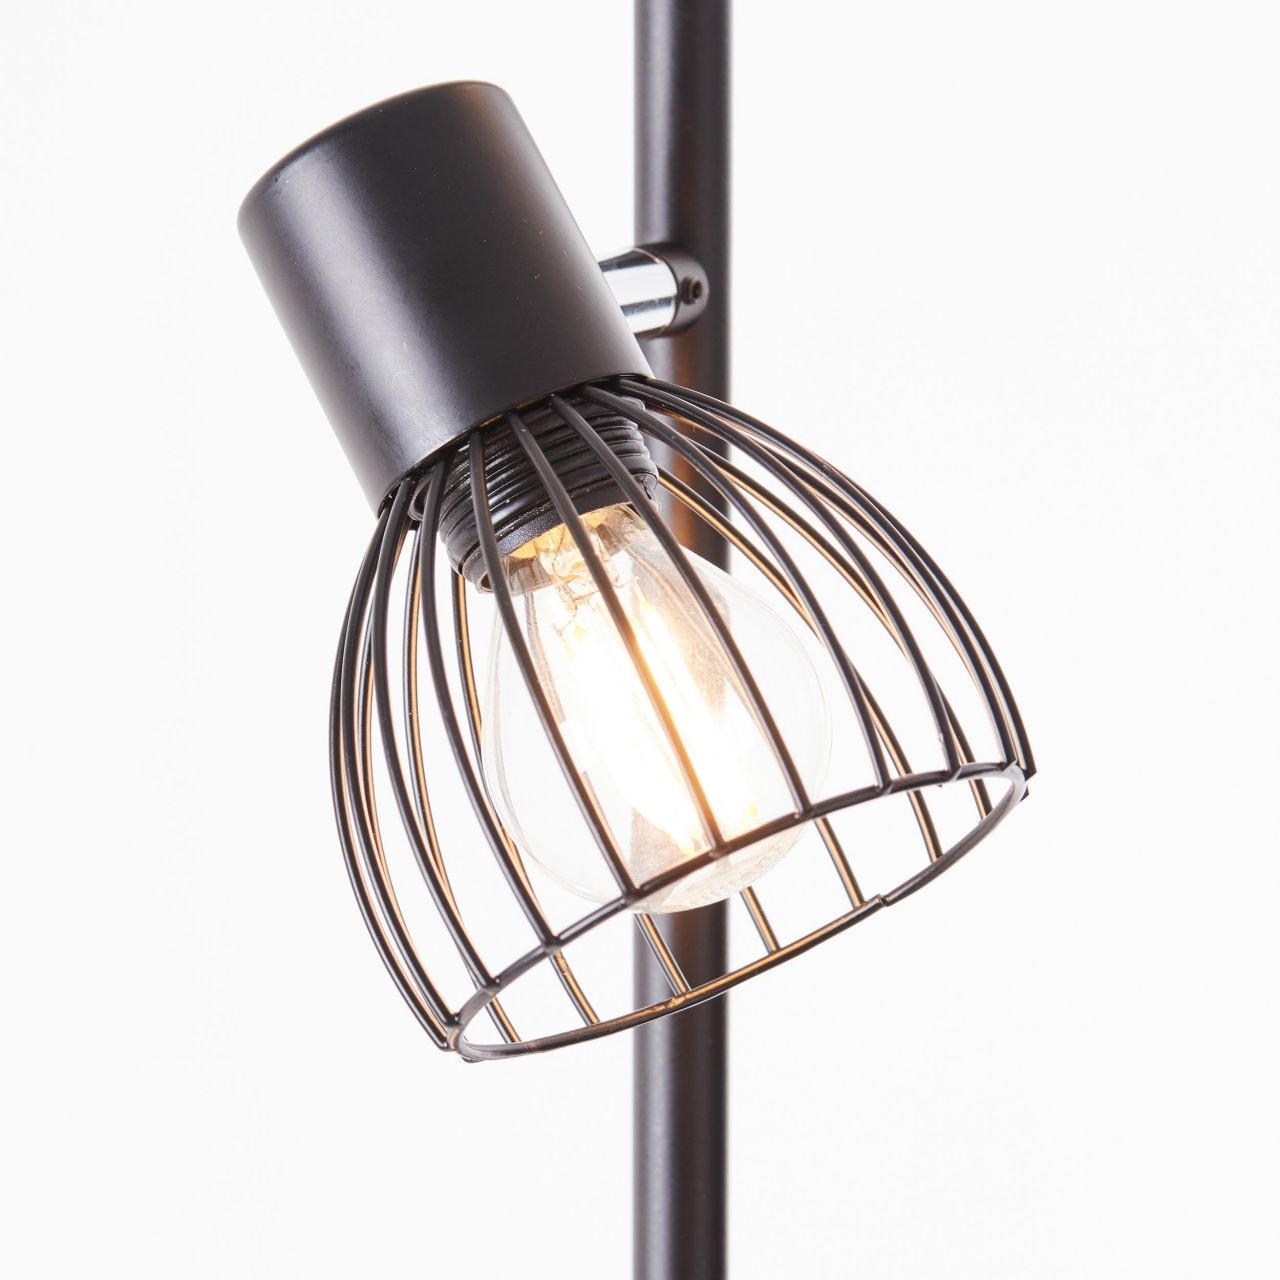 Brilliant Stehlampe »Blacky«, 3 flammig-flammig, 162 cm Höhe, 3 x E14, schwenkbar, Metall, schwarz matt